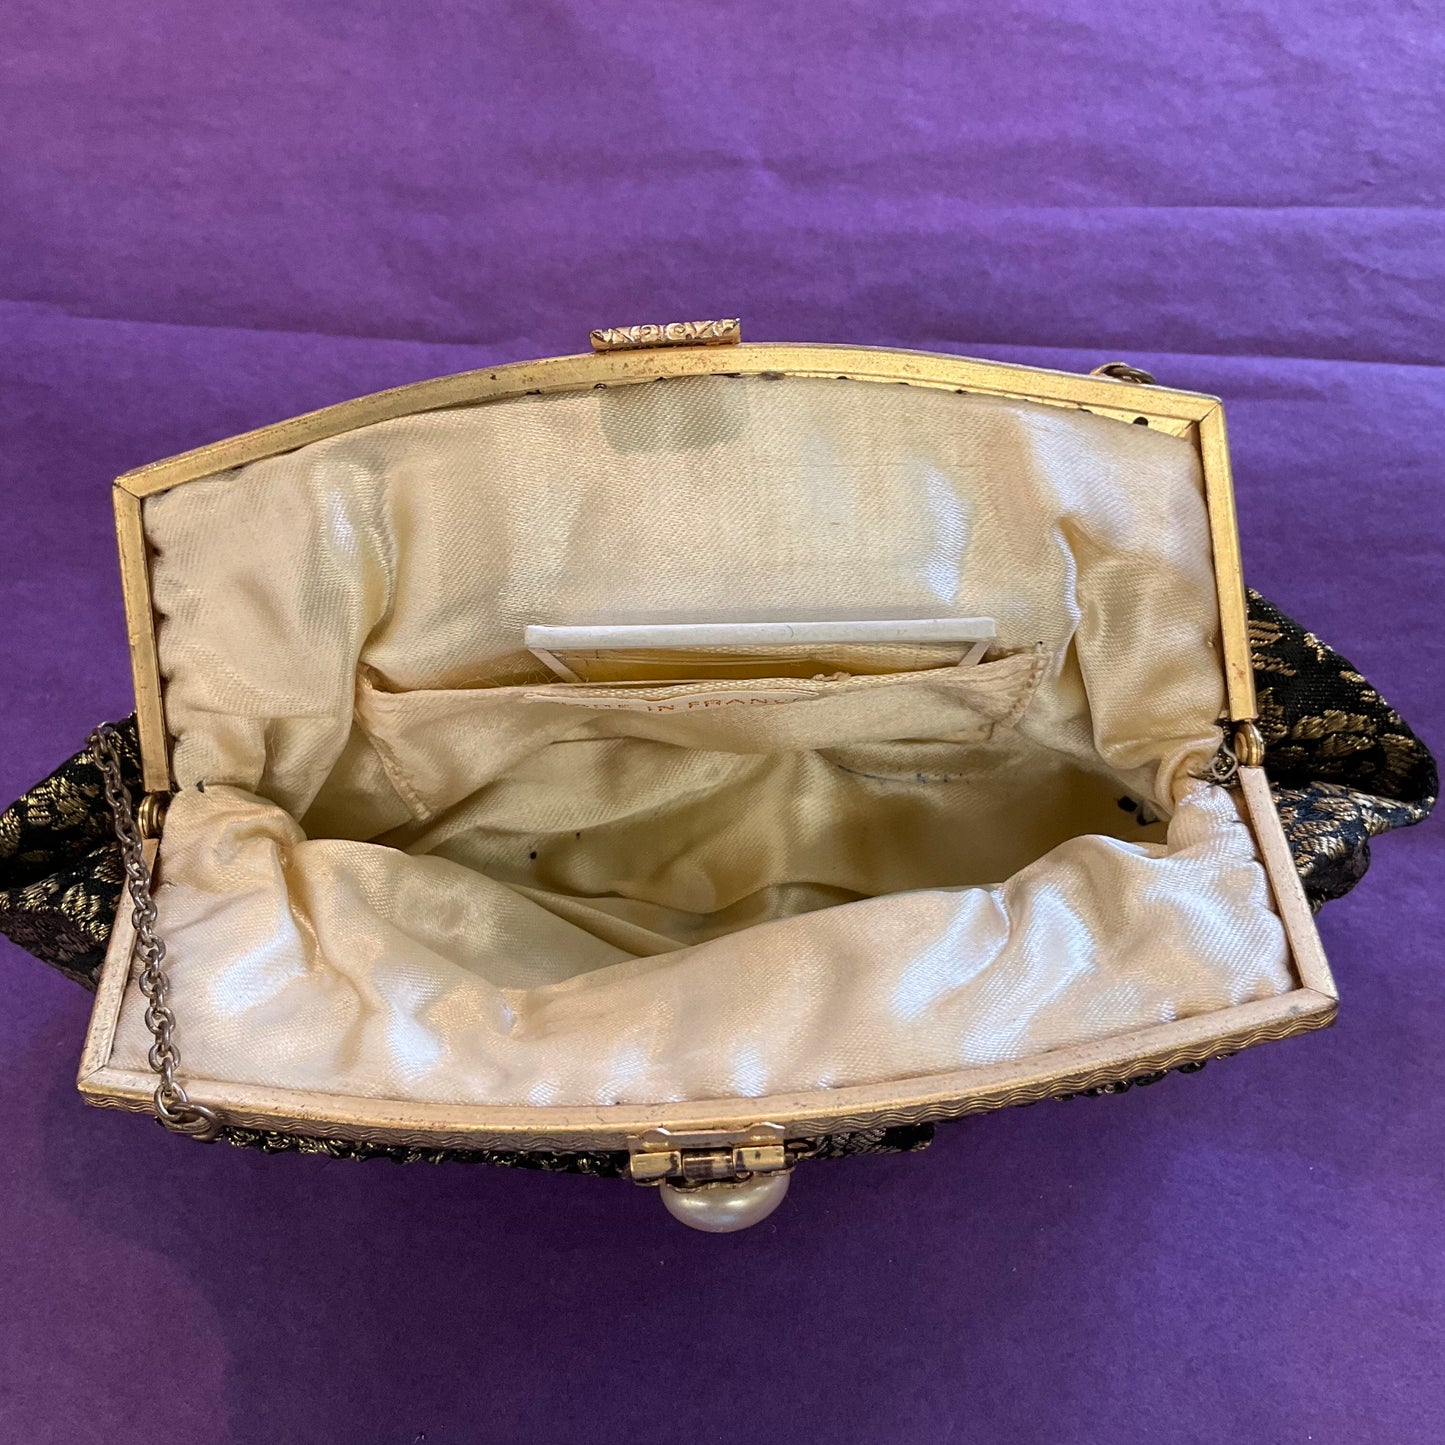 Vintage French 1930s/40s gold and black floral brocade evening bag, wedding, formal event.